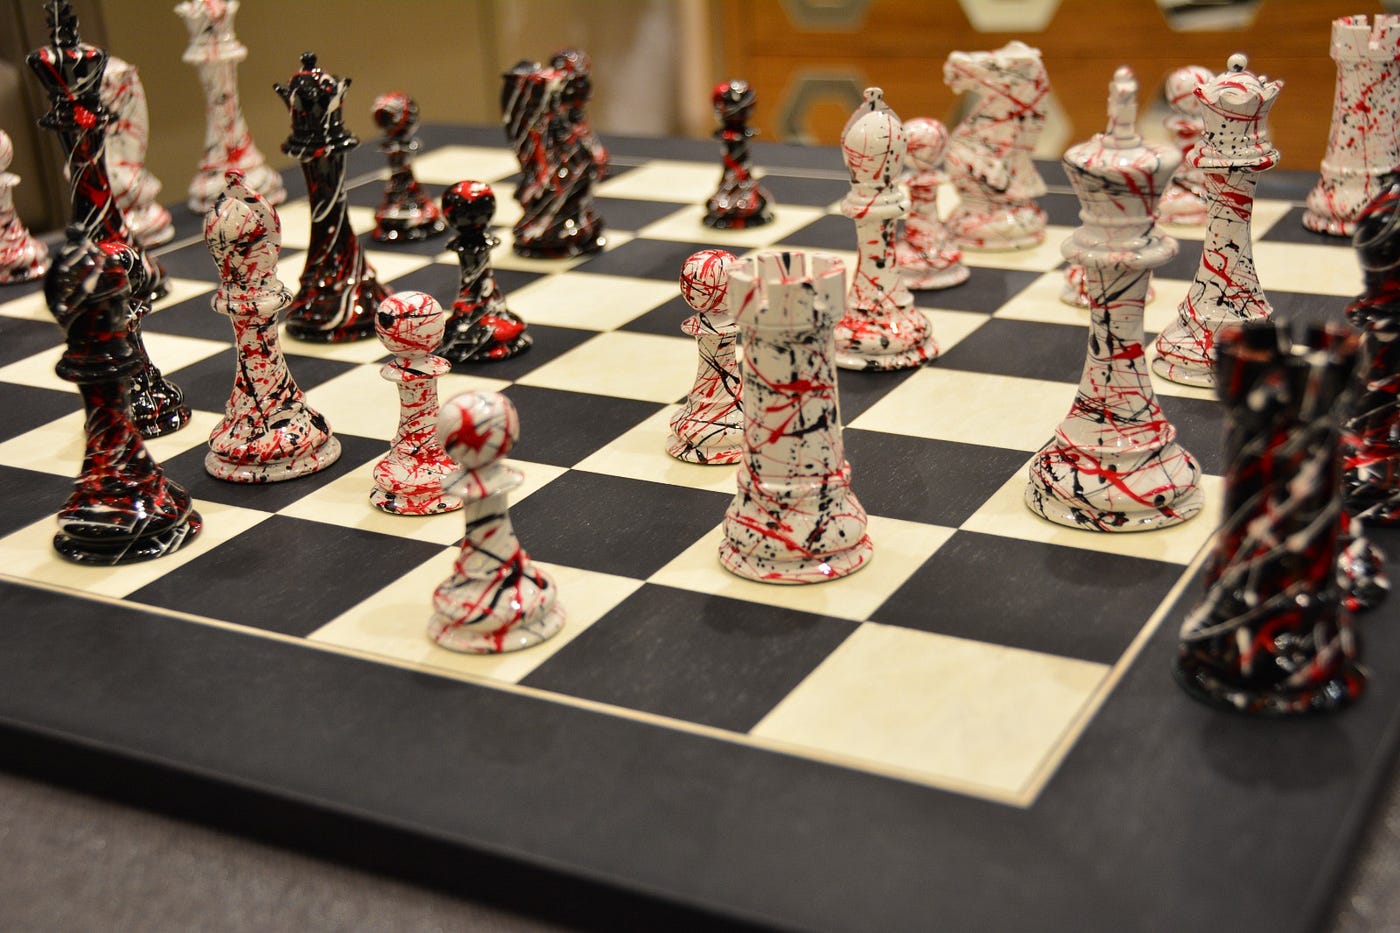 Custom Chess Sets